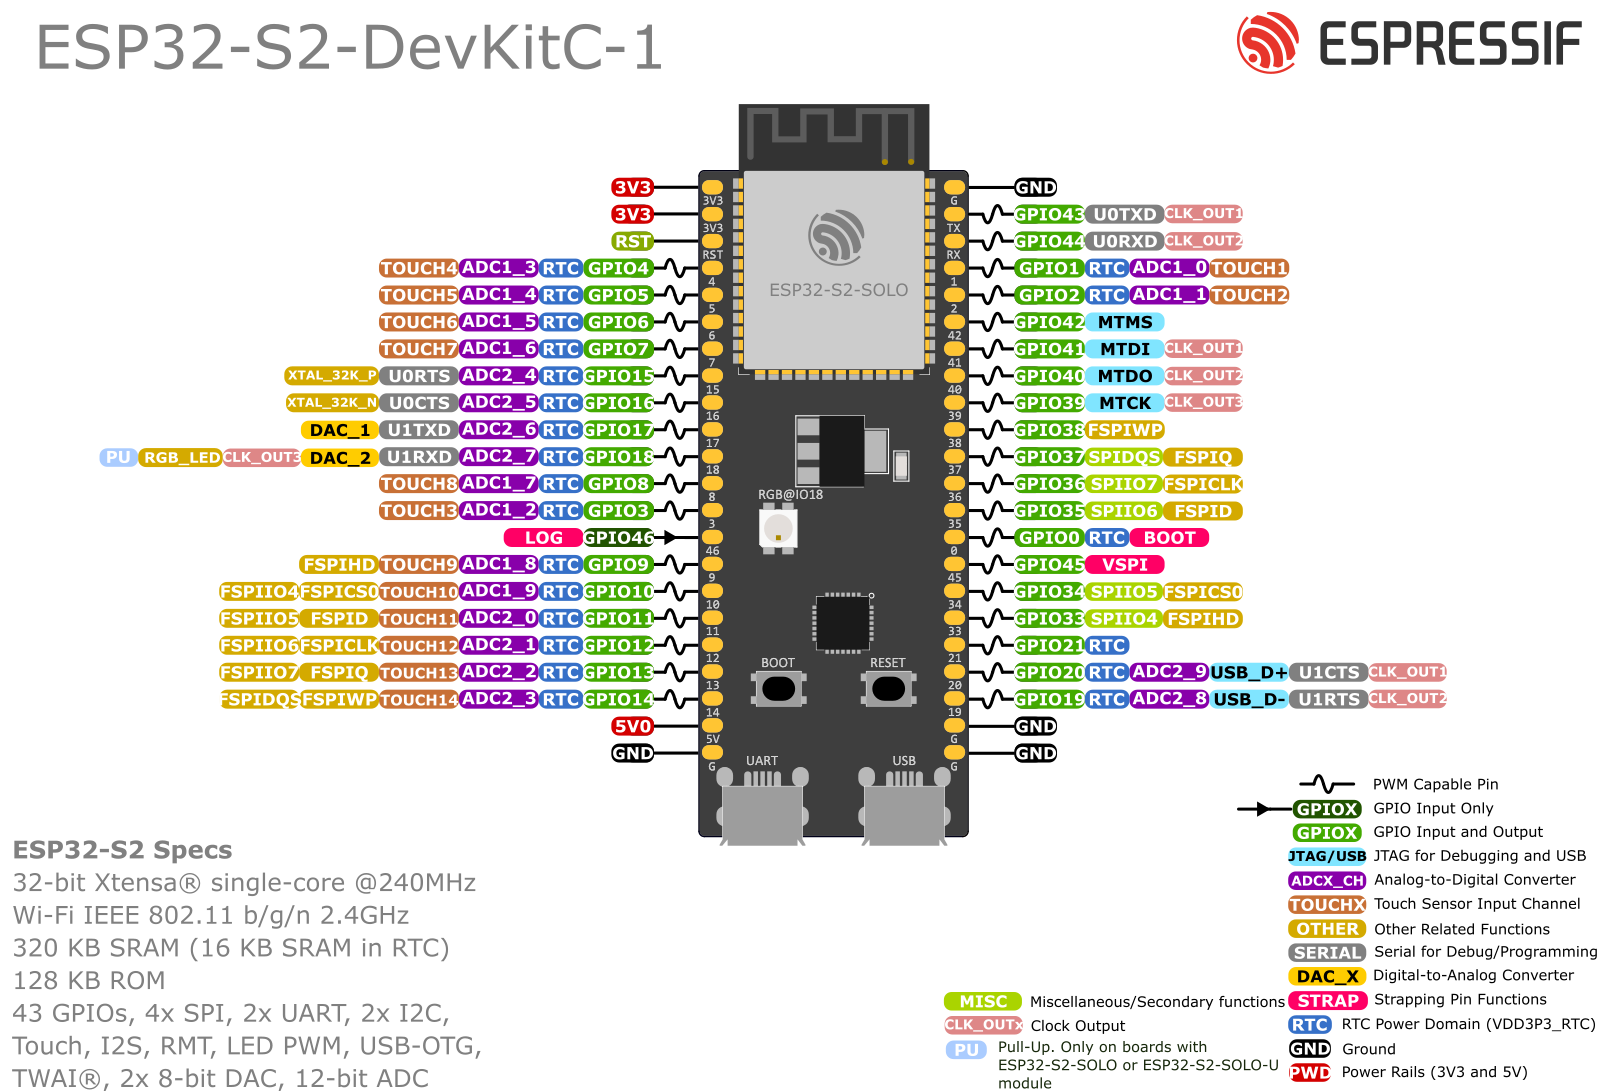 ESP32-S2-DevKitC-1 (click to enlarge)